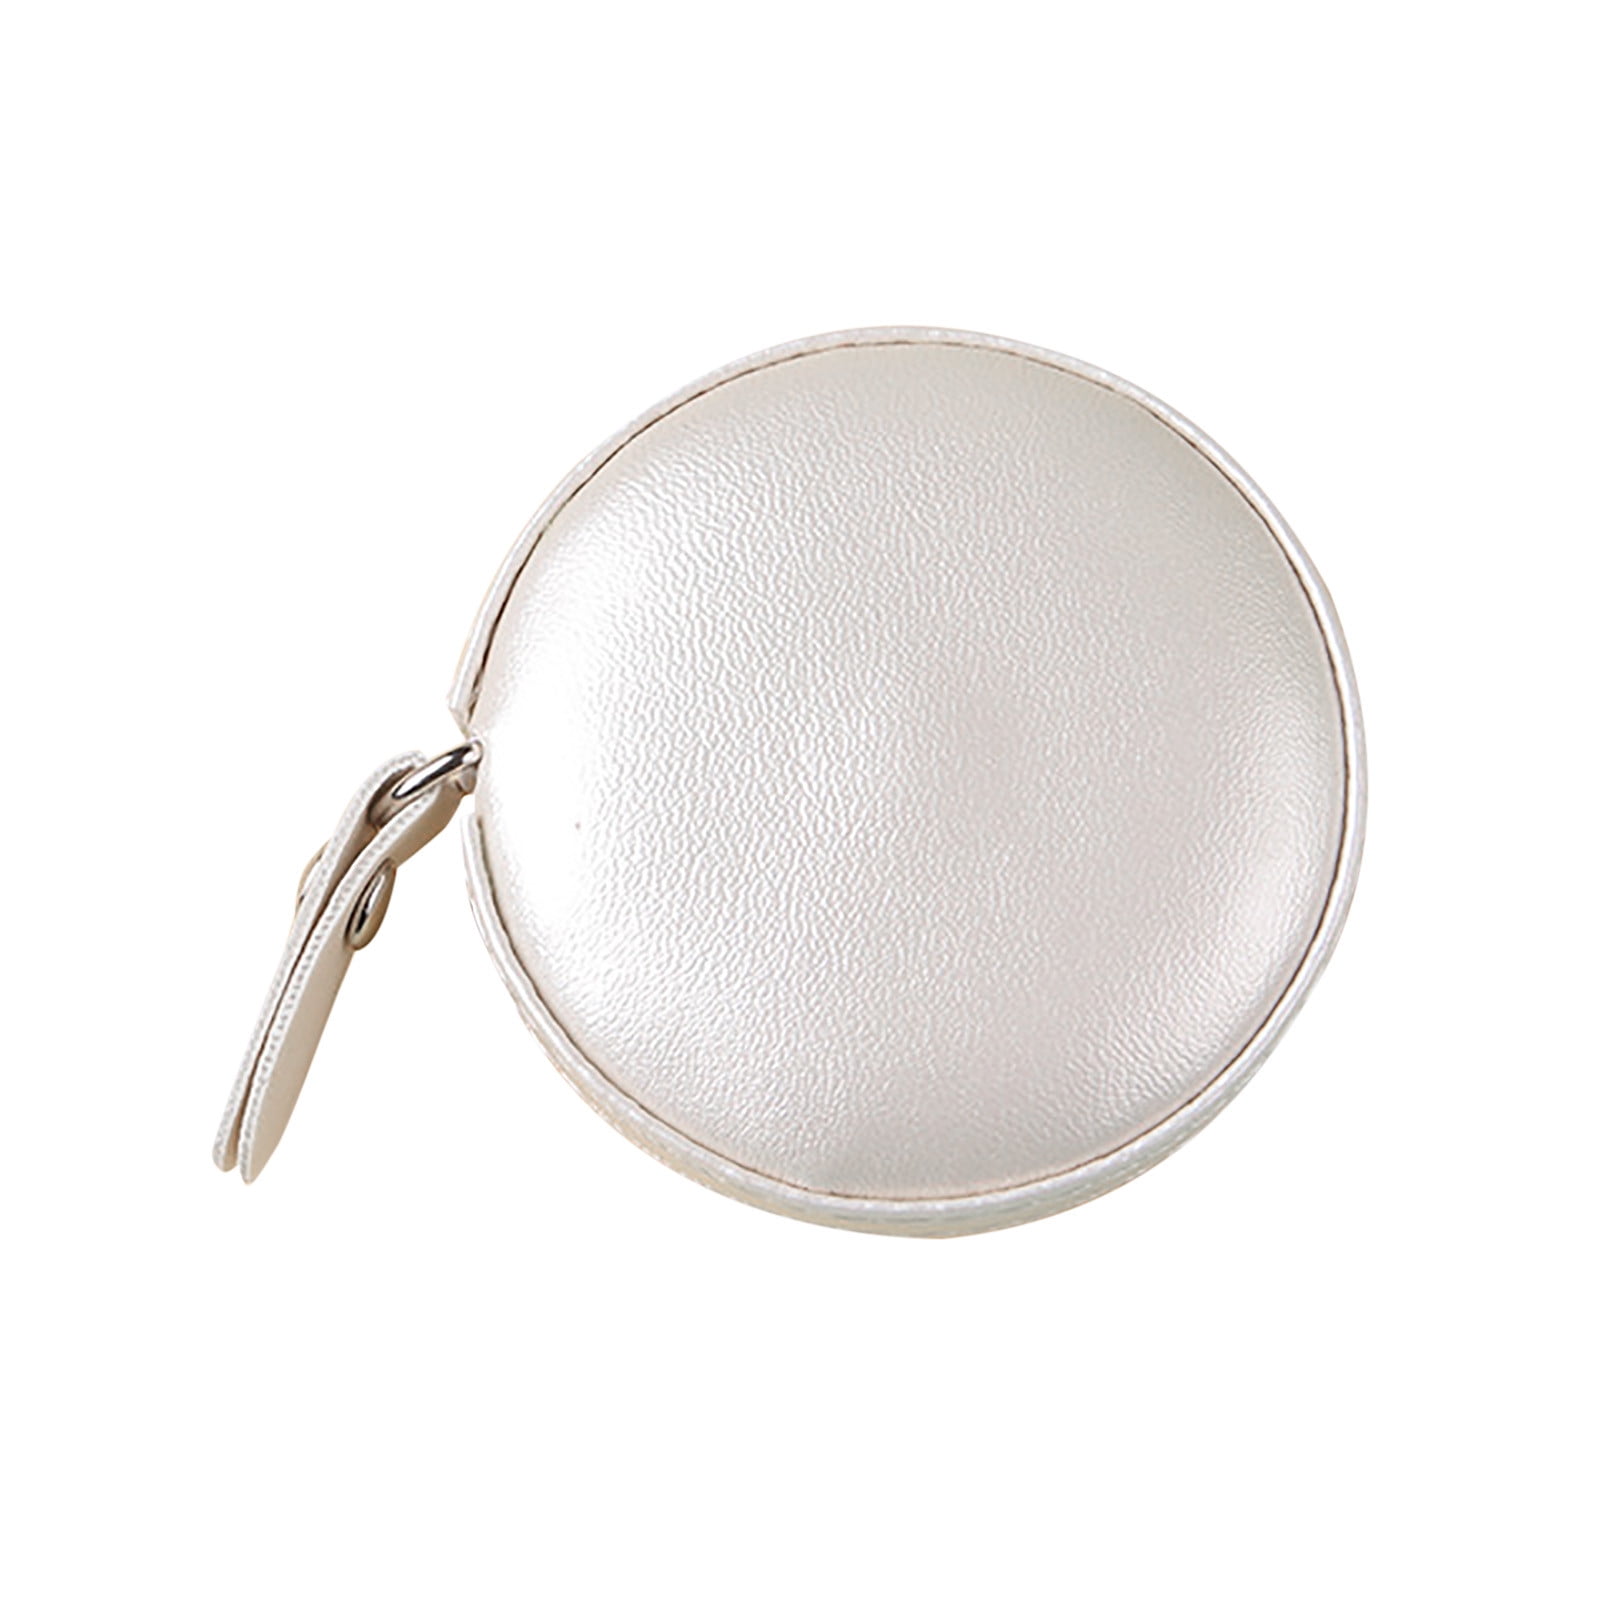 Hexagonal socket button oval plate for doors Custom Brass Chrome Polished Engraved 